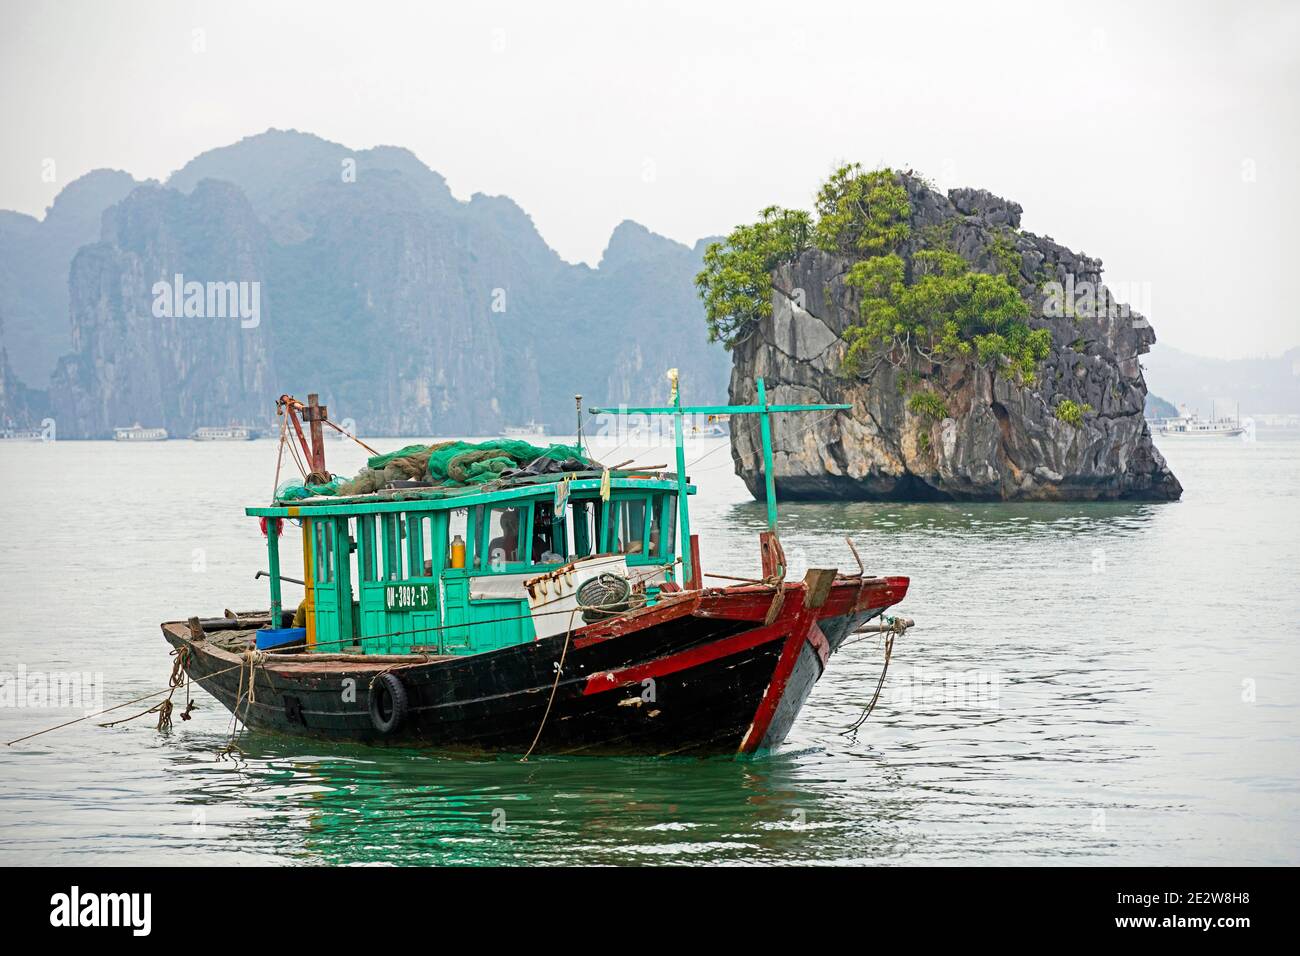 Hölzerne Fischerboot und Kalkstein monolithischen Inseln in Ha Long Bay / Halong Bay / Vinh Ha Long, Quang Ninh Provinz, Vietnam Stockfoto